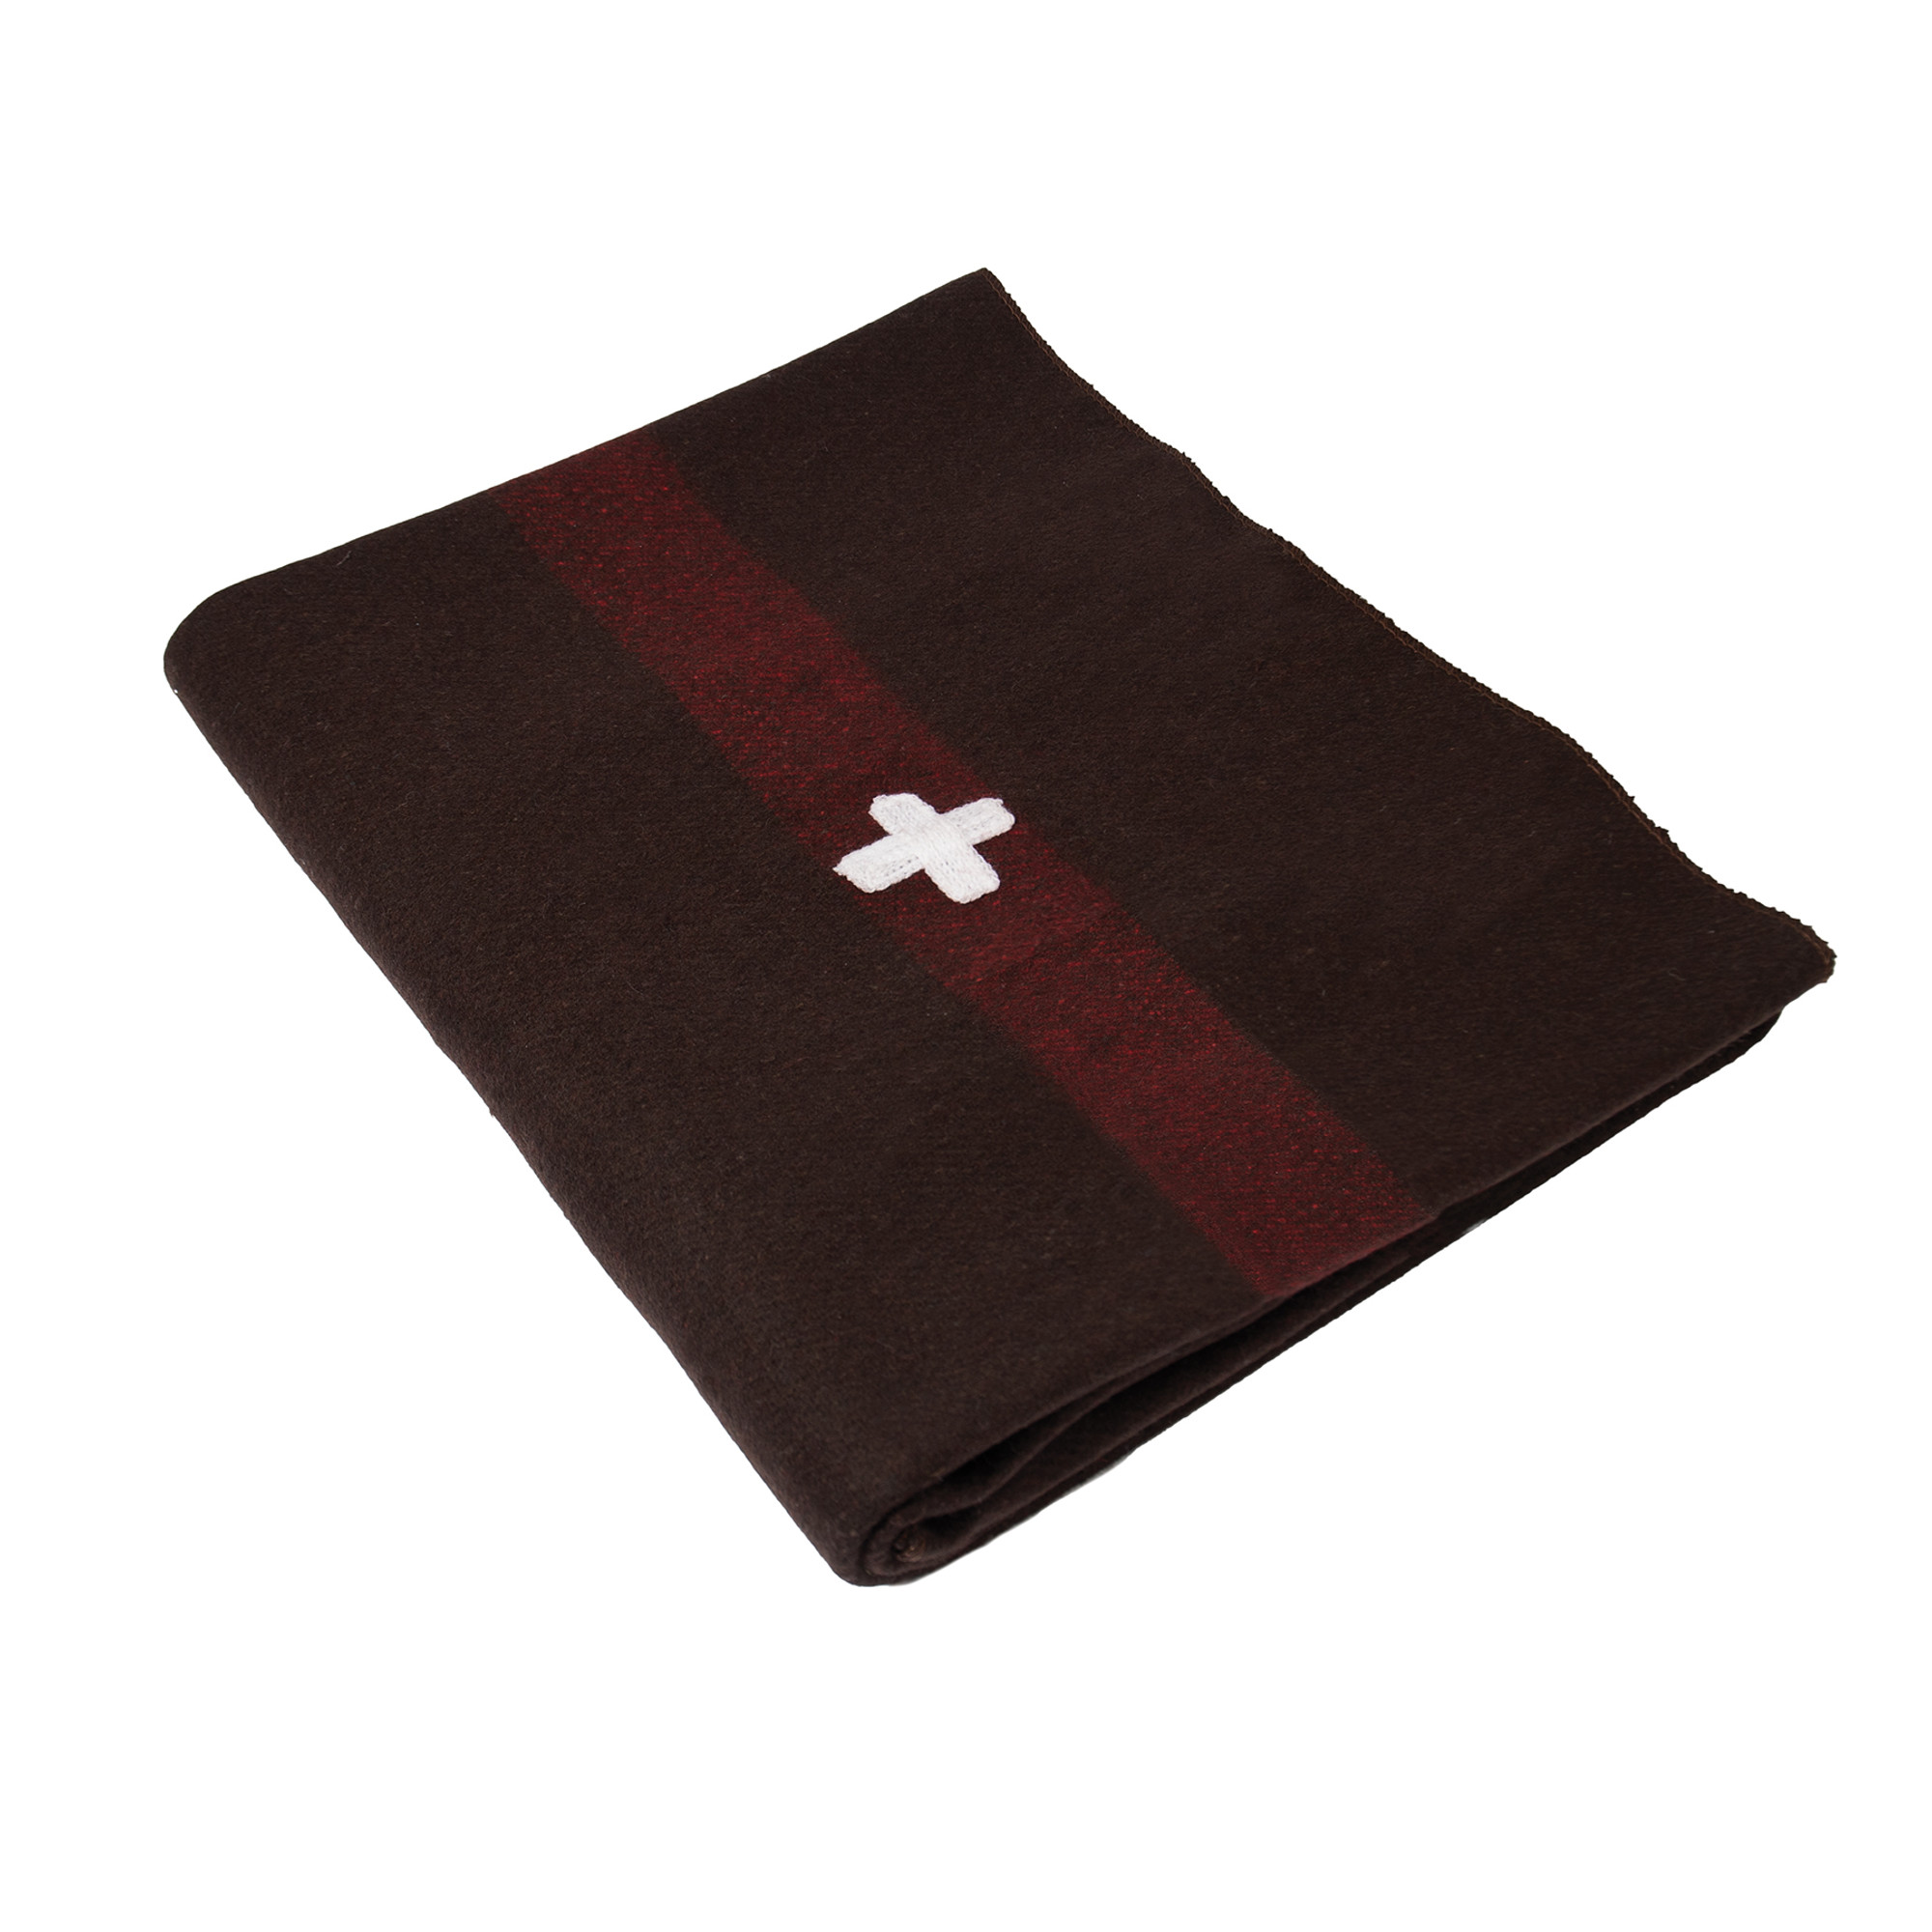 Rothco Swiss Army Wool Blanket w/Cross